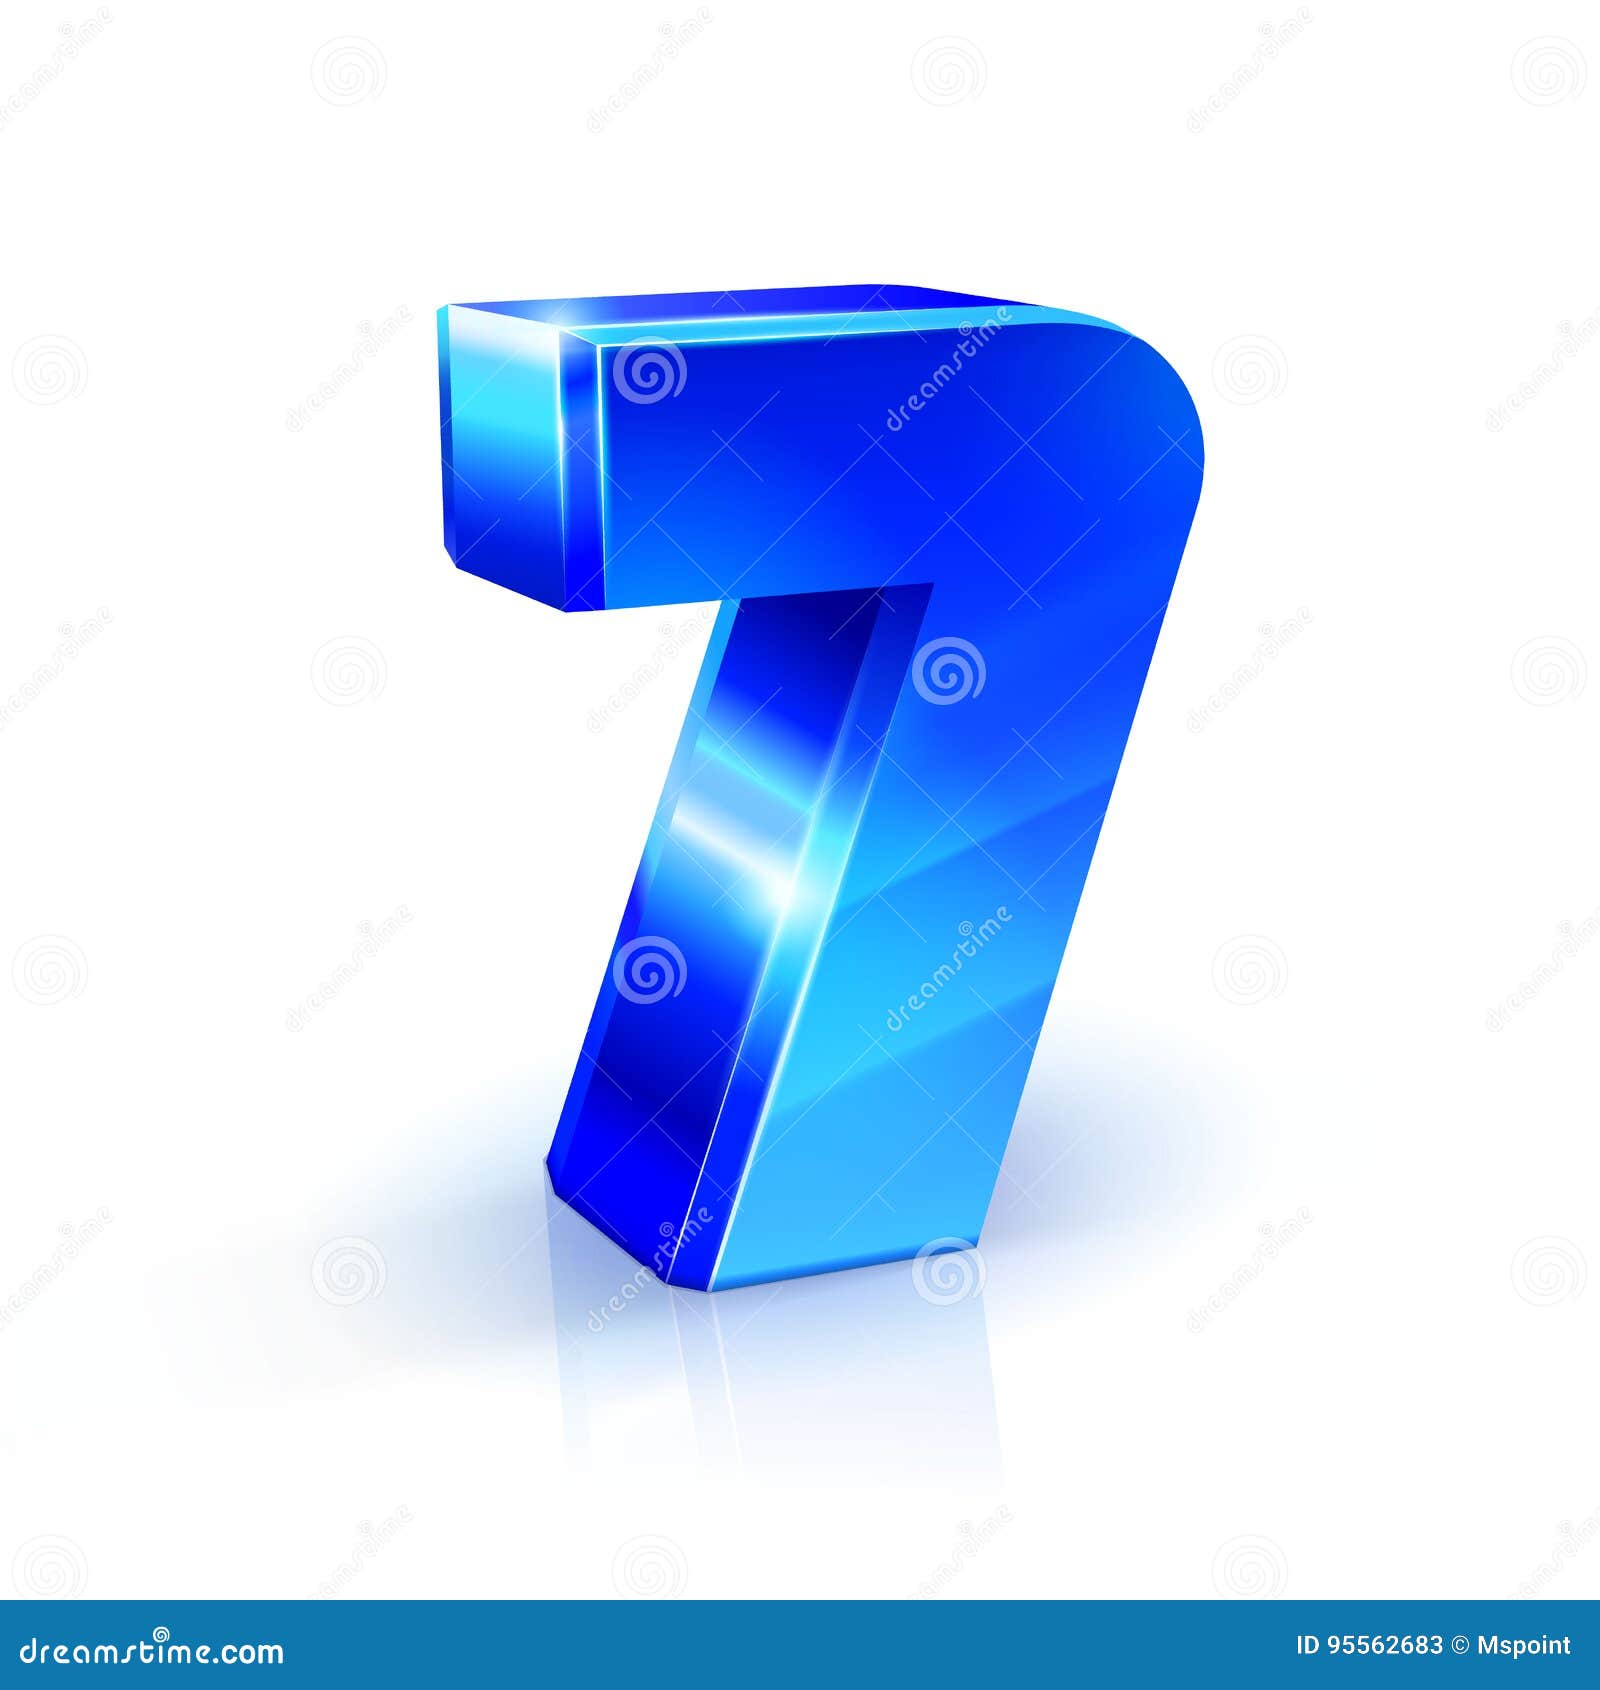 Glossy Blue Seven 7 Number 3d Illustration On White Background Stock